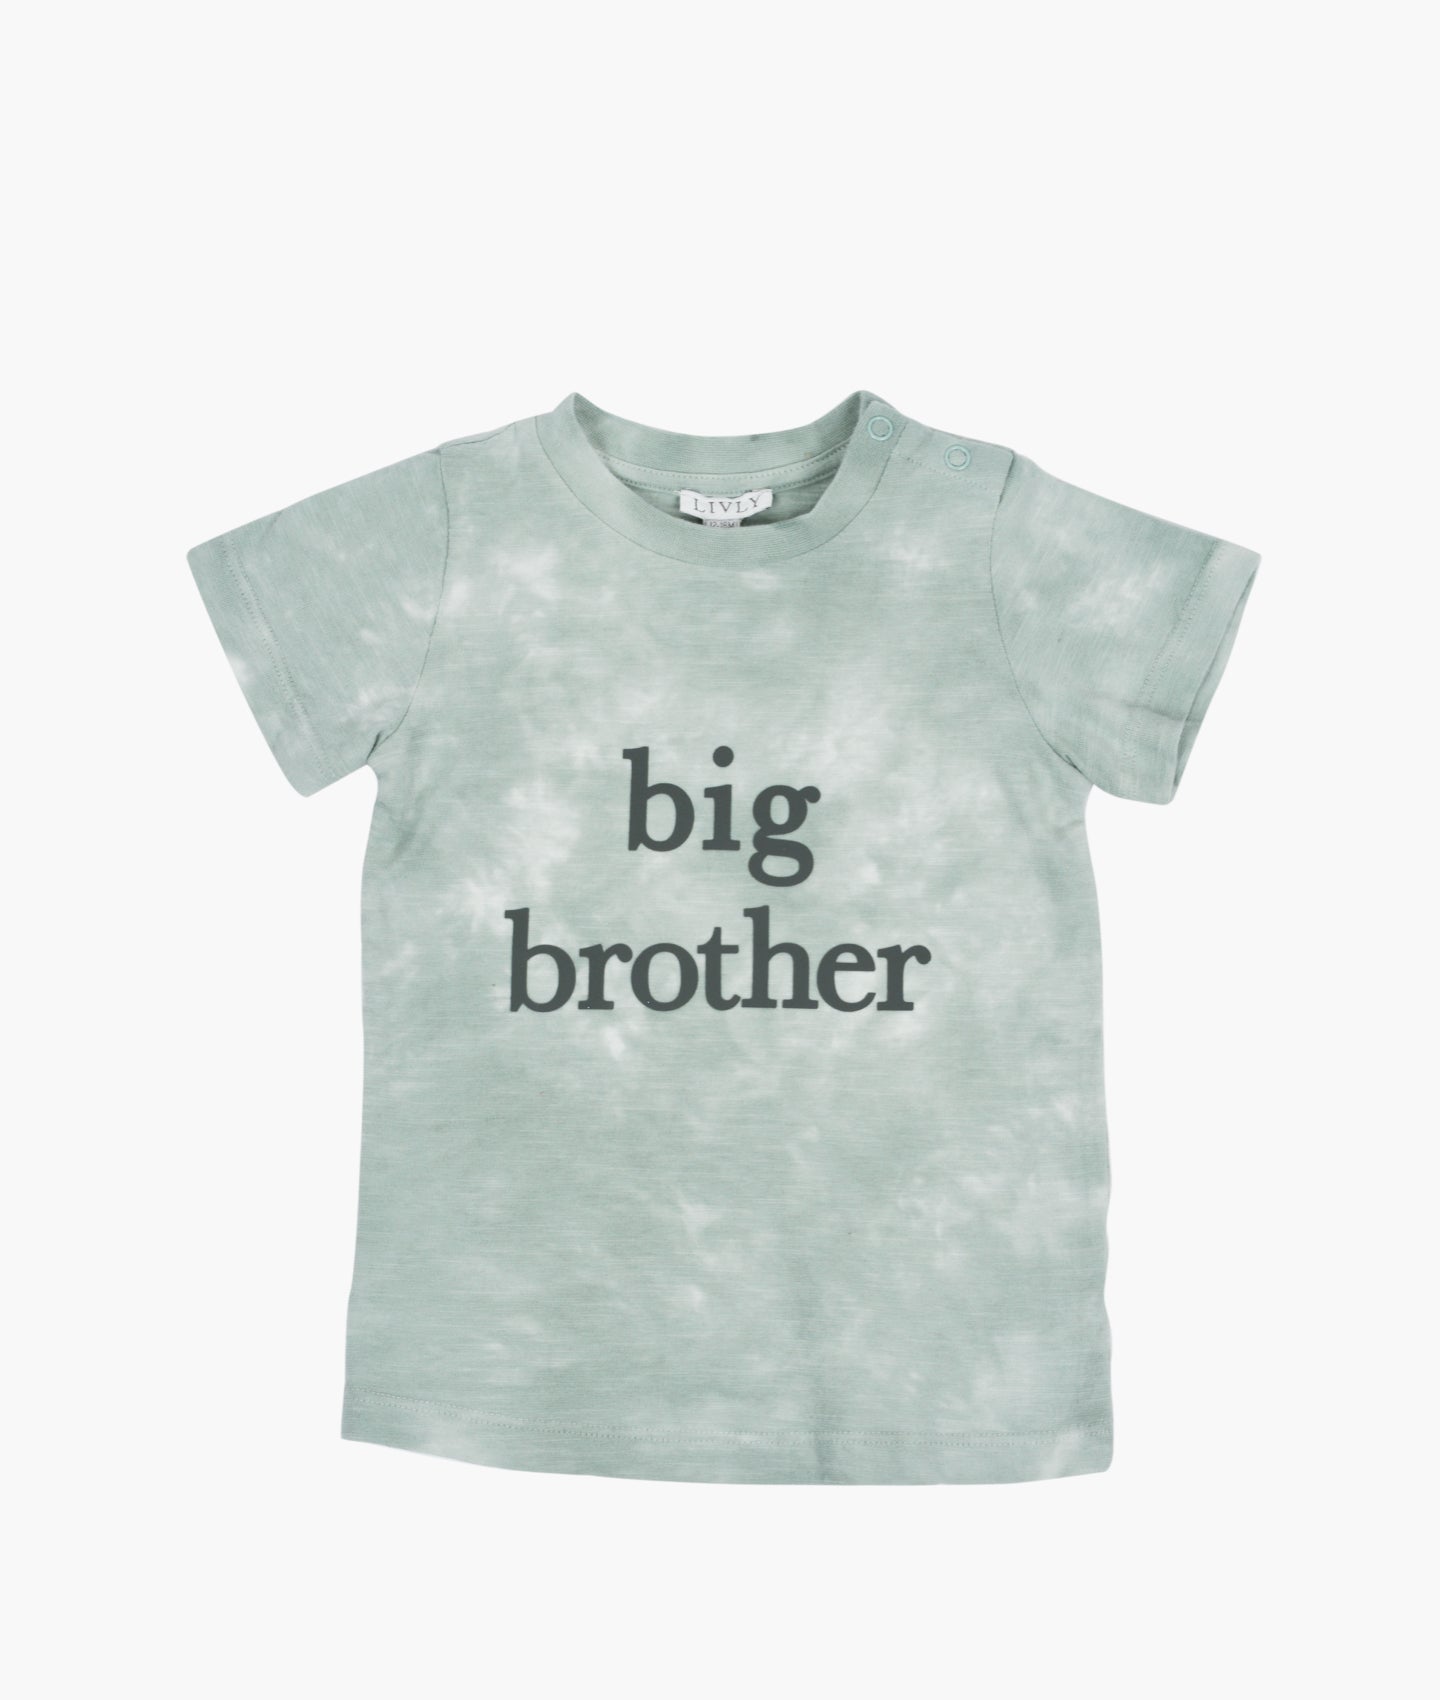 LIVLY US – Brother Big T-shirt